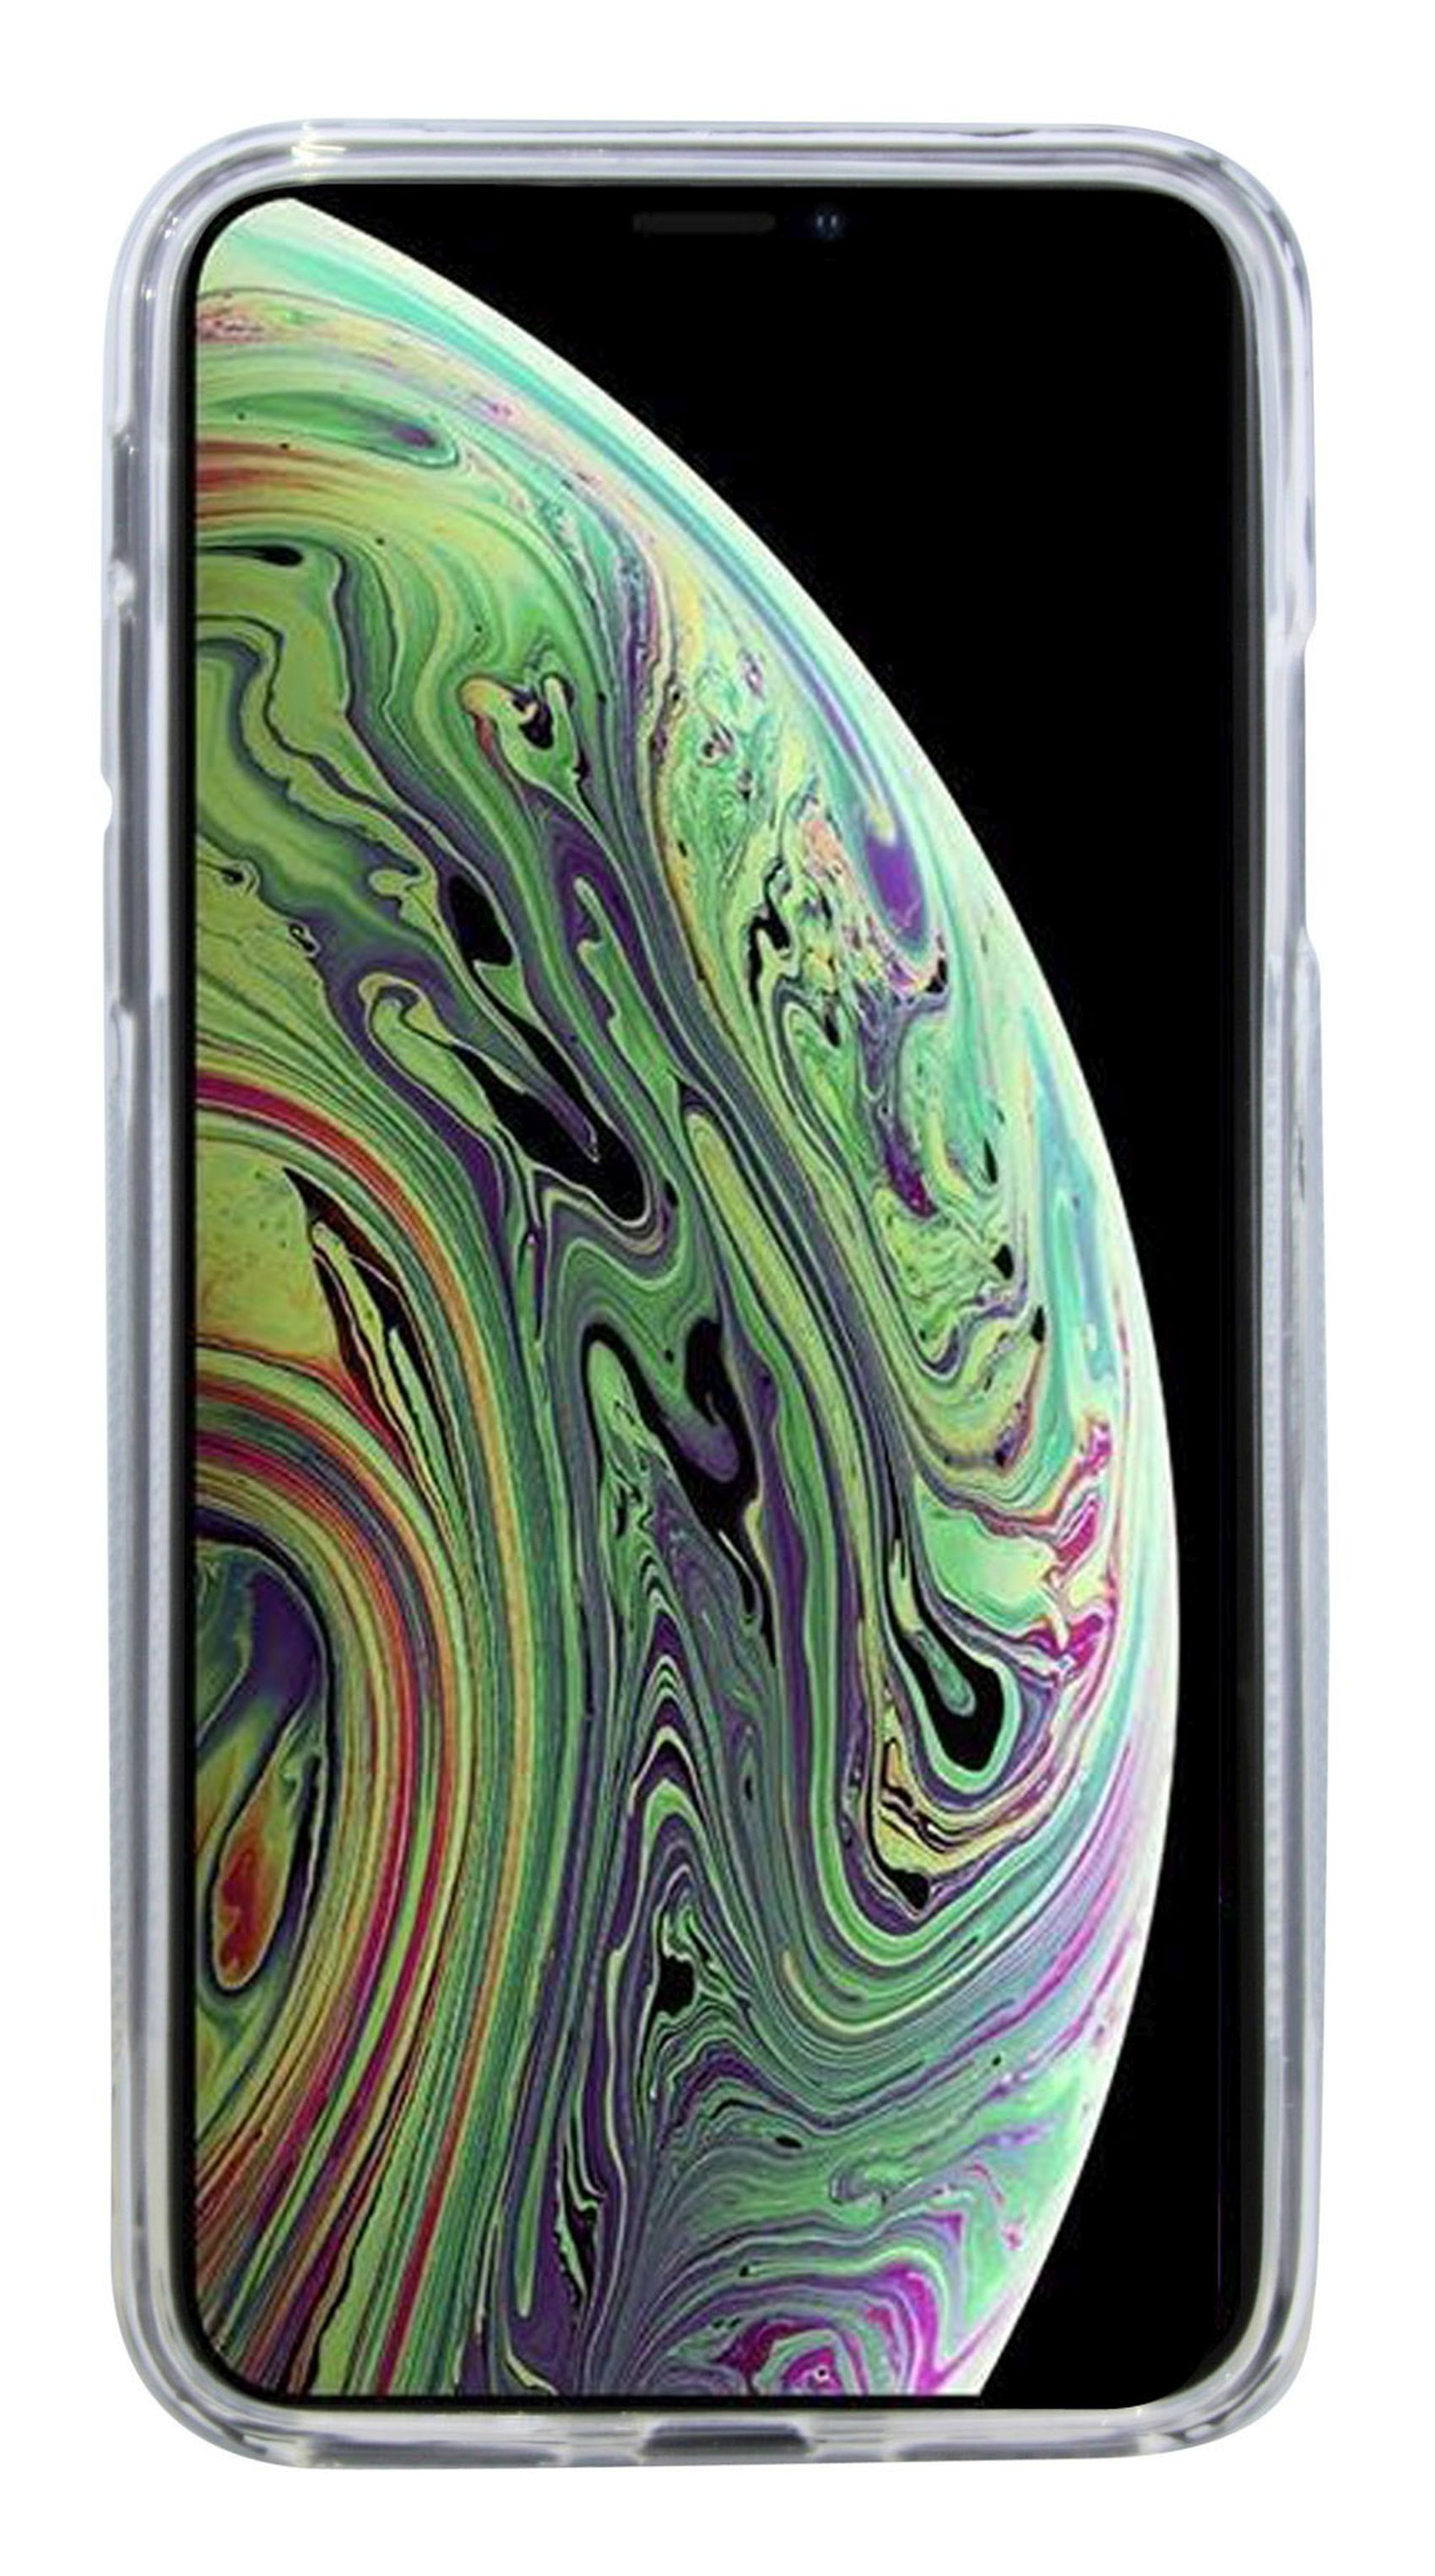 Bumper, Max, Apple, S-Line XS Cover, Transparent COFI iPhone